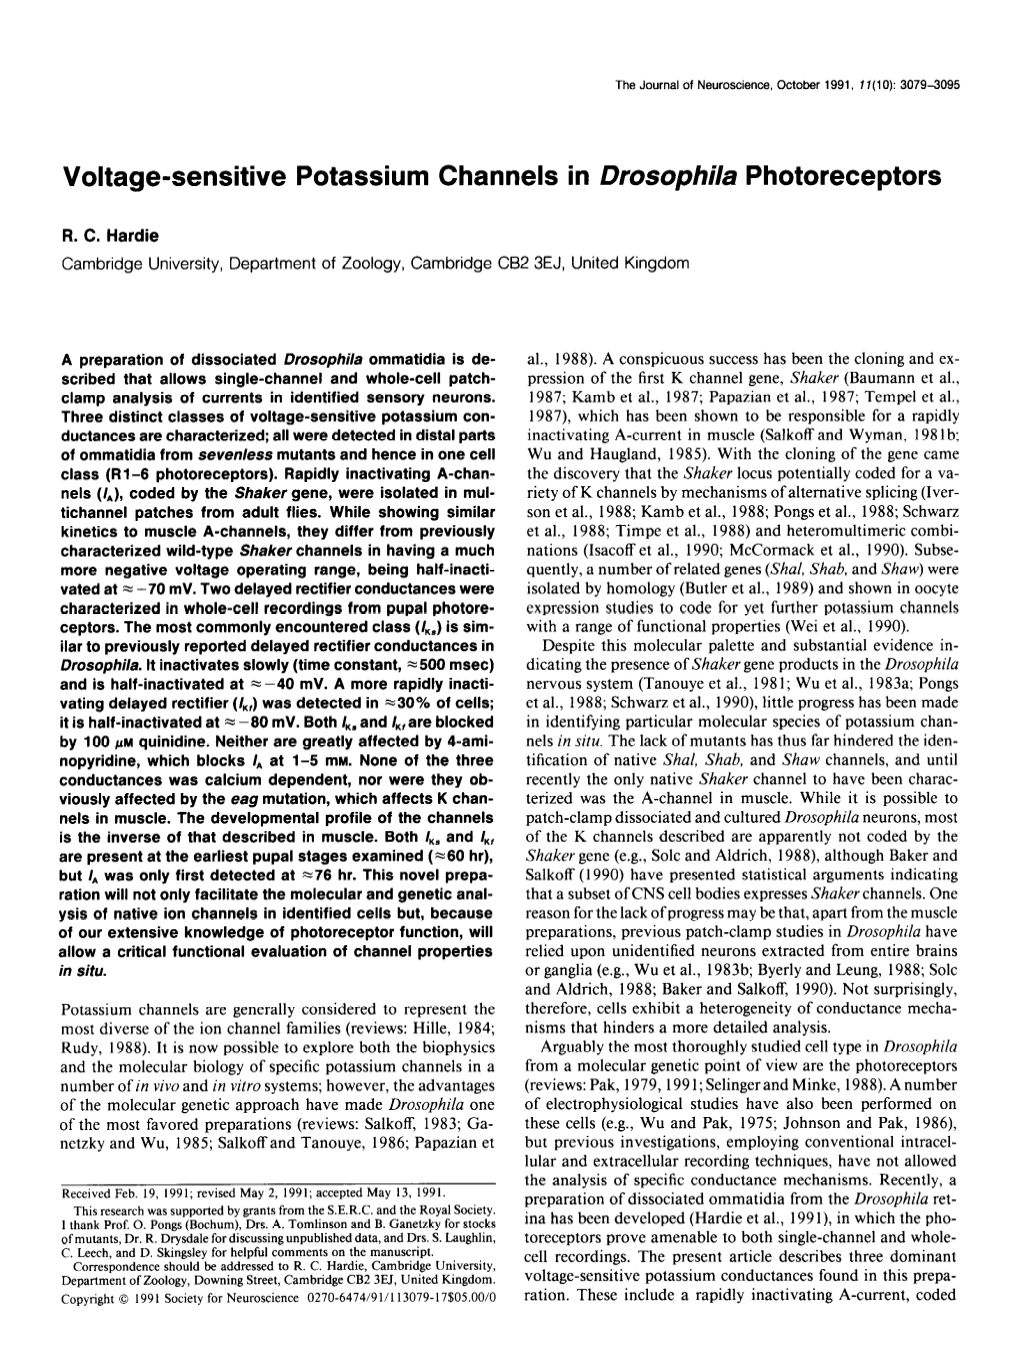 Voltage-Sensitive Potassium Channels in Drosophila Photoreceptors